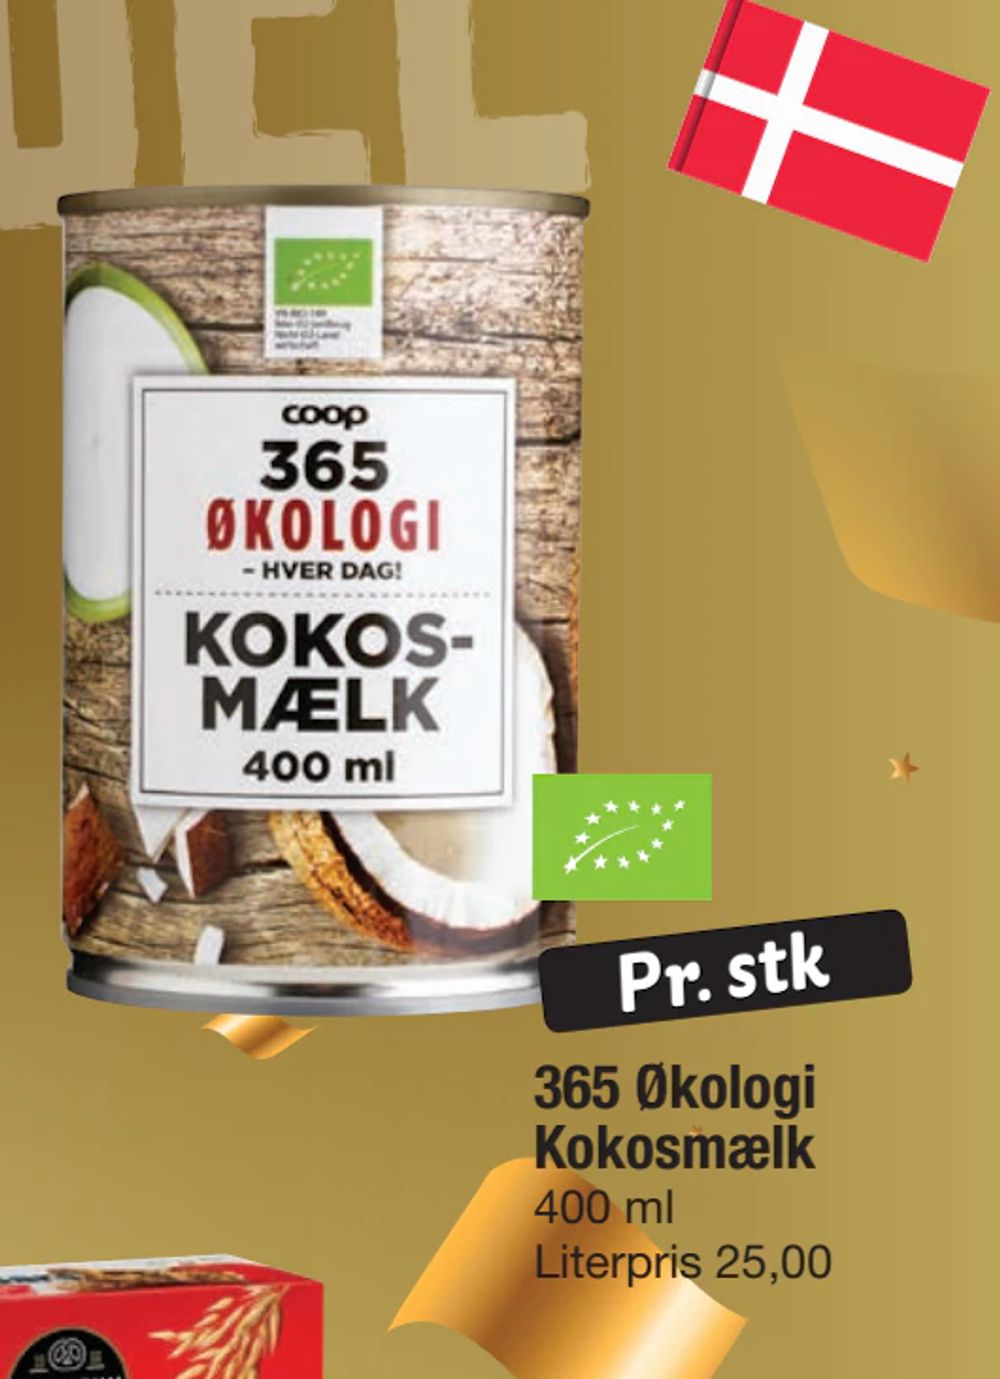 Tilbud på 365 Økologi Kokosmælk fra fakta Tyskland til 10 kr.